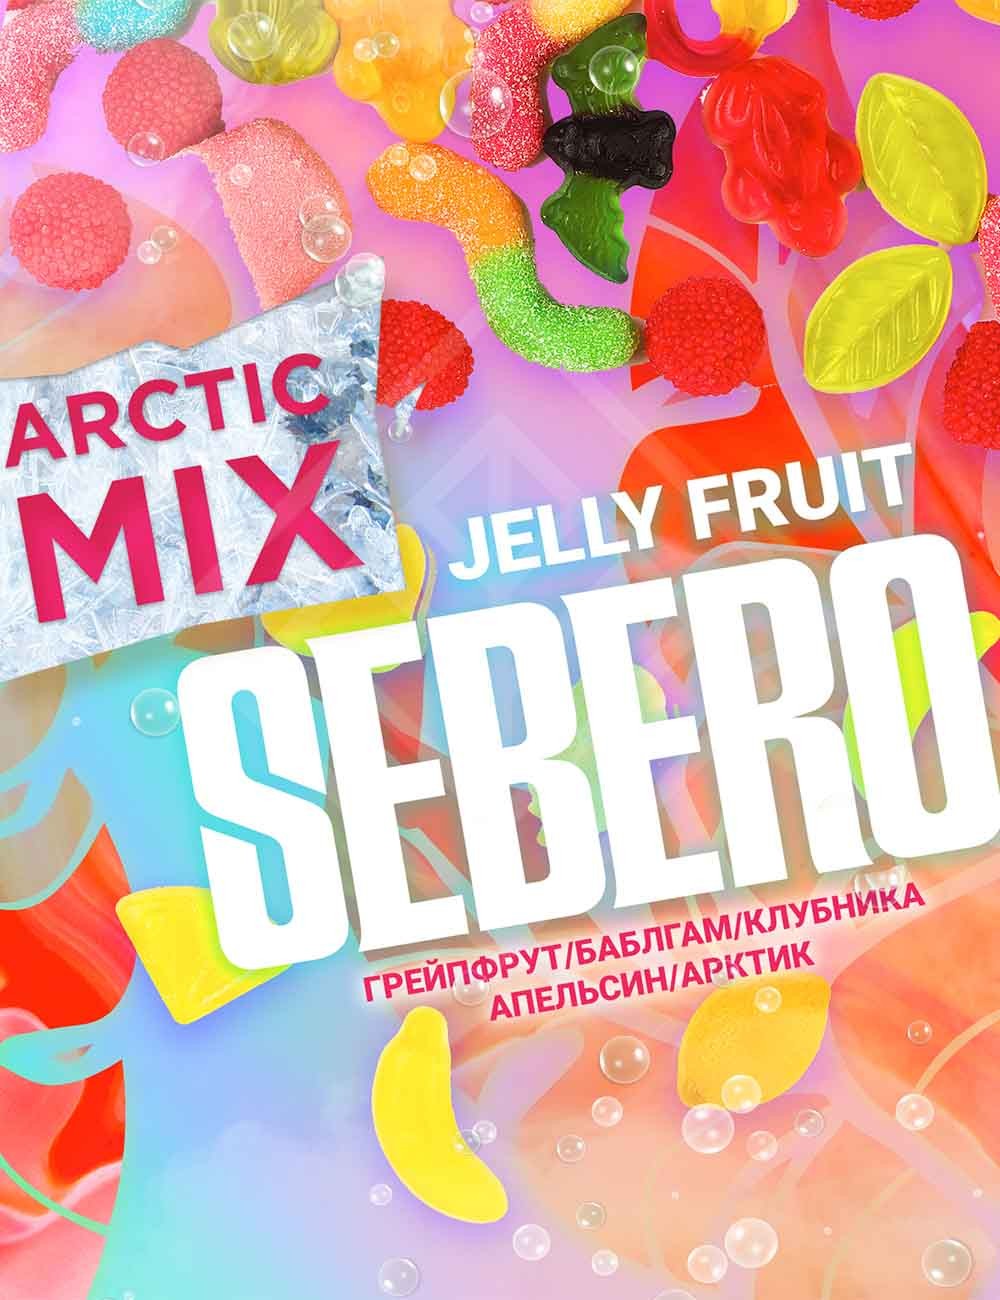 "Arctic Mix" Jelly Fruit (Jelly Frt)